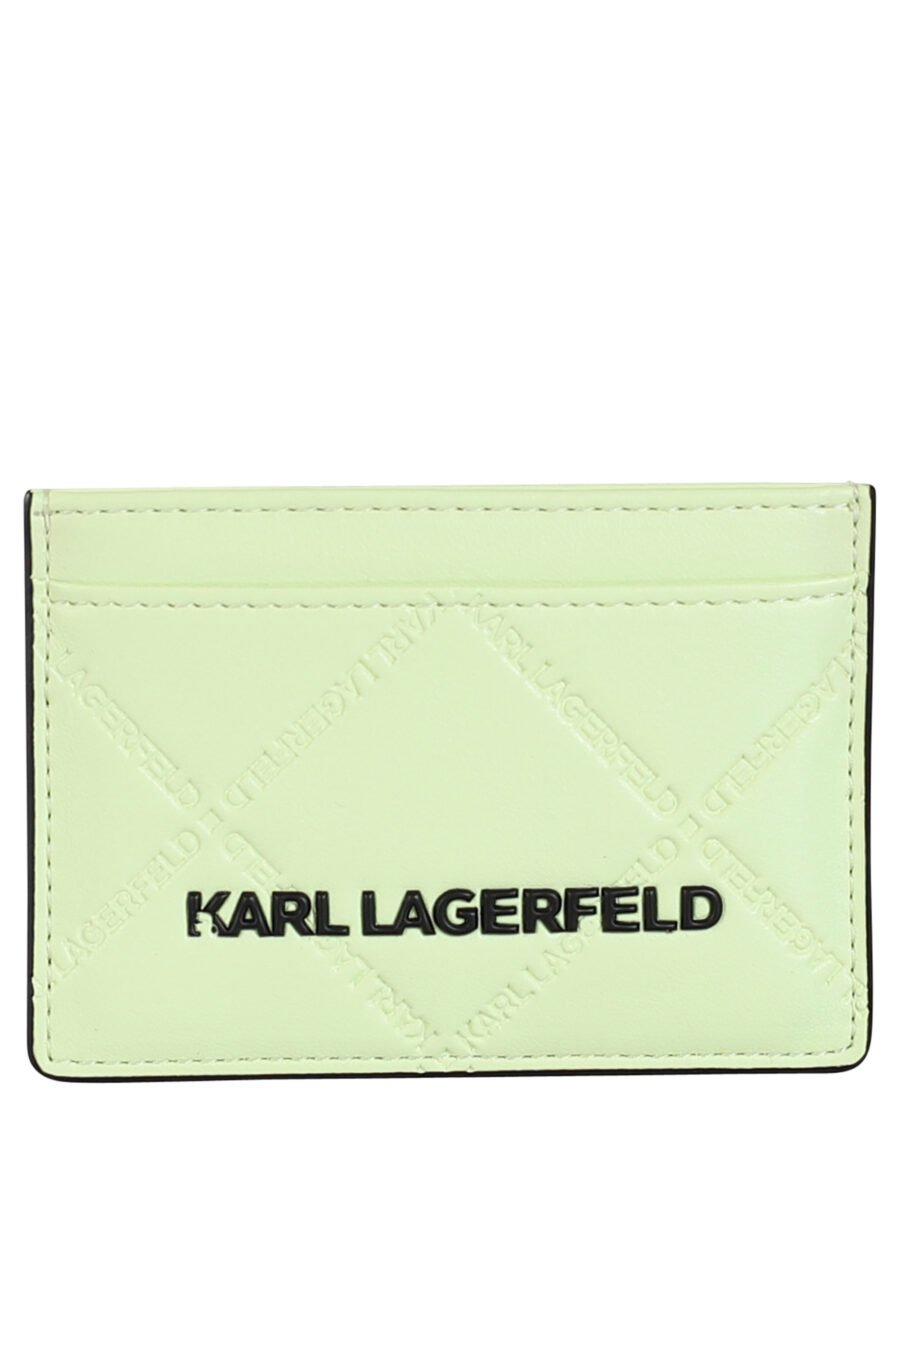 Green card holder with black logo - 8720744104551